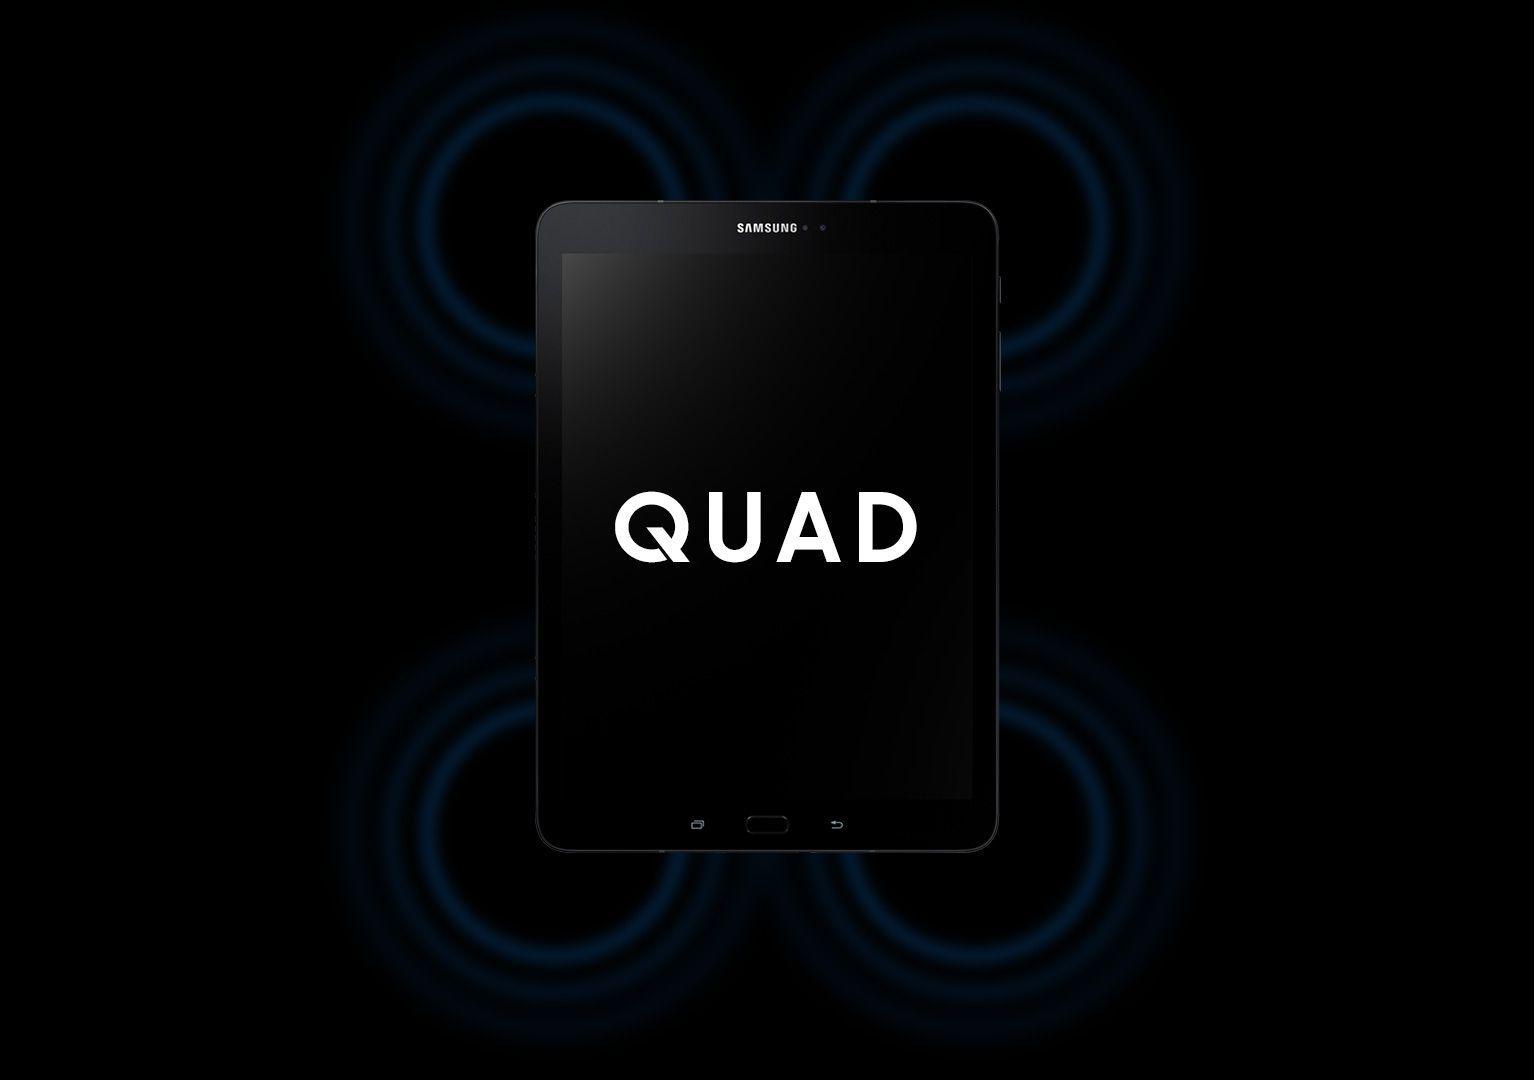 Samsung Galaxy Tab Logo - Samsung Galaxy Tab S3 4G | HDR Tablet with S Pen | Samsung UK